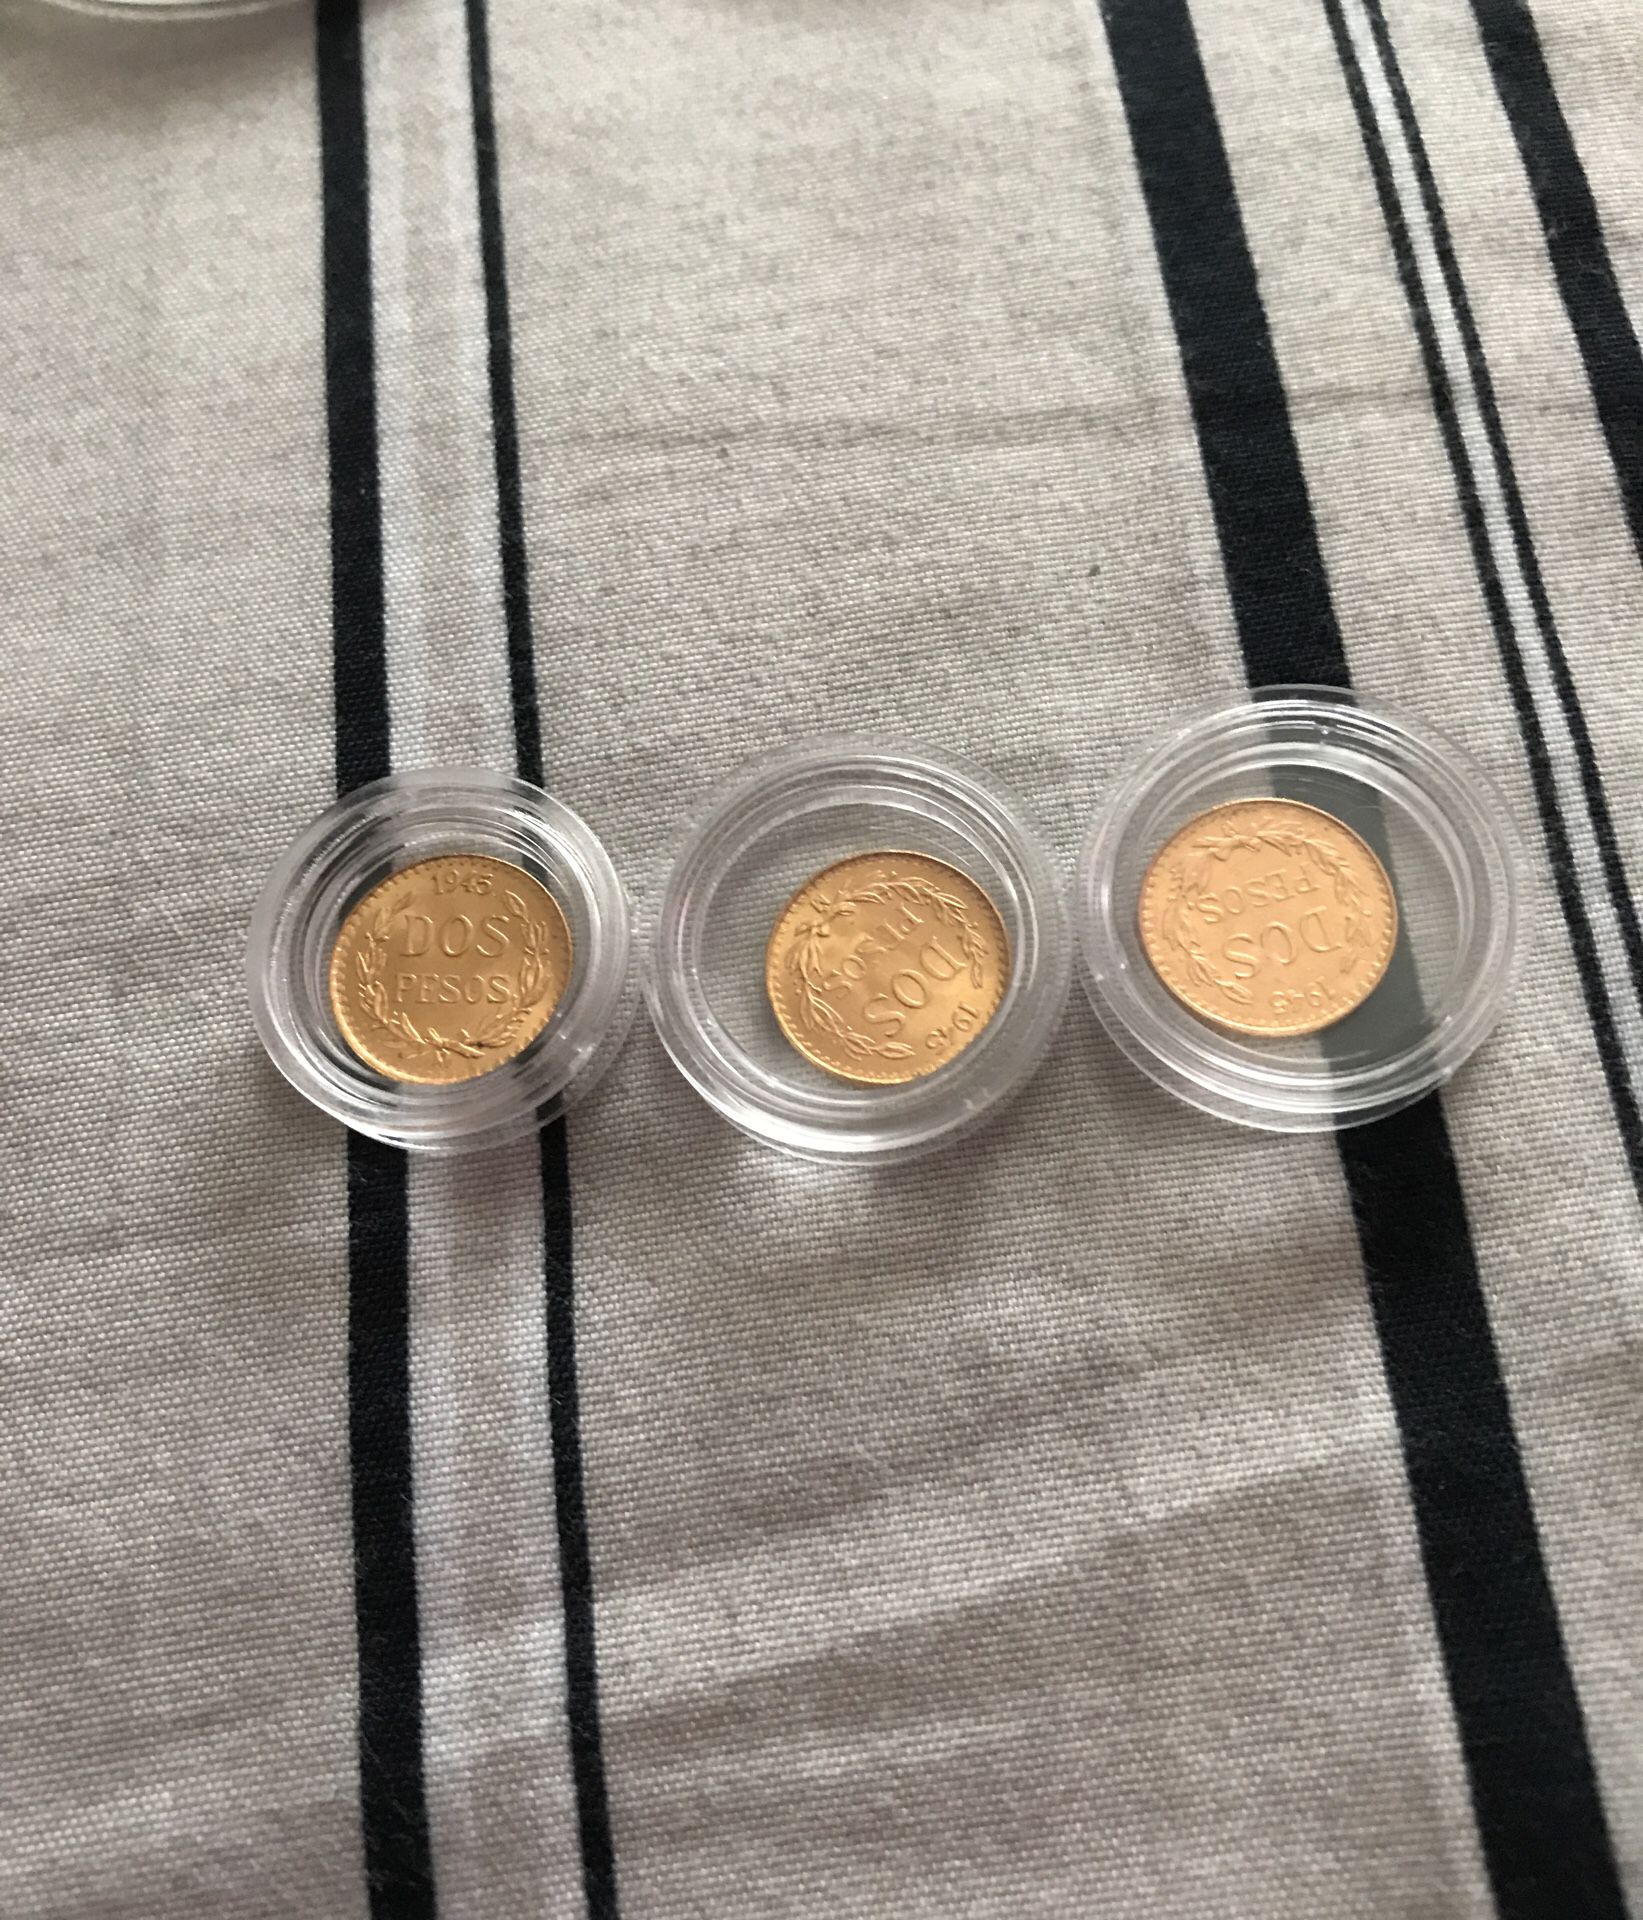 Dos Pesos moneditas de Oro $100 cada uno